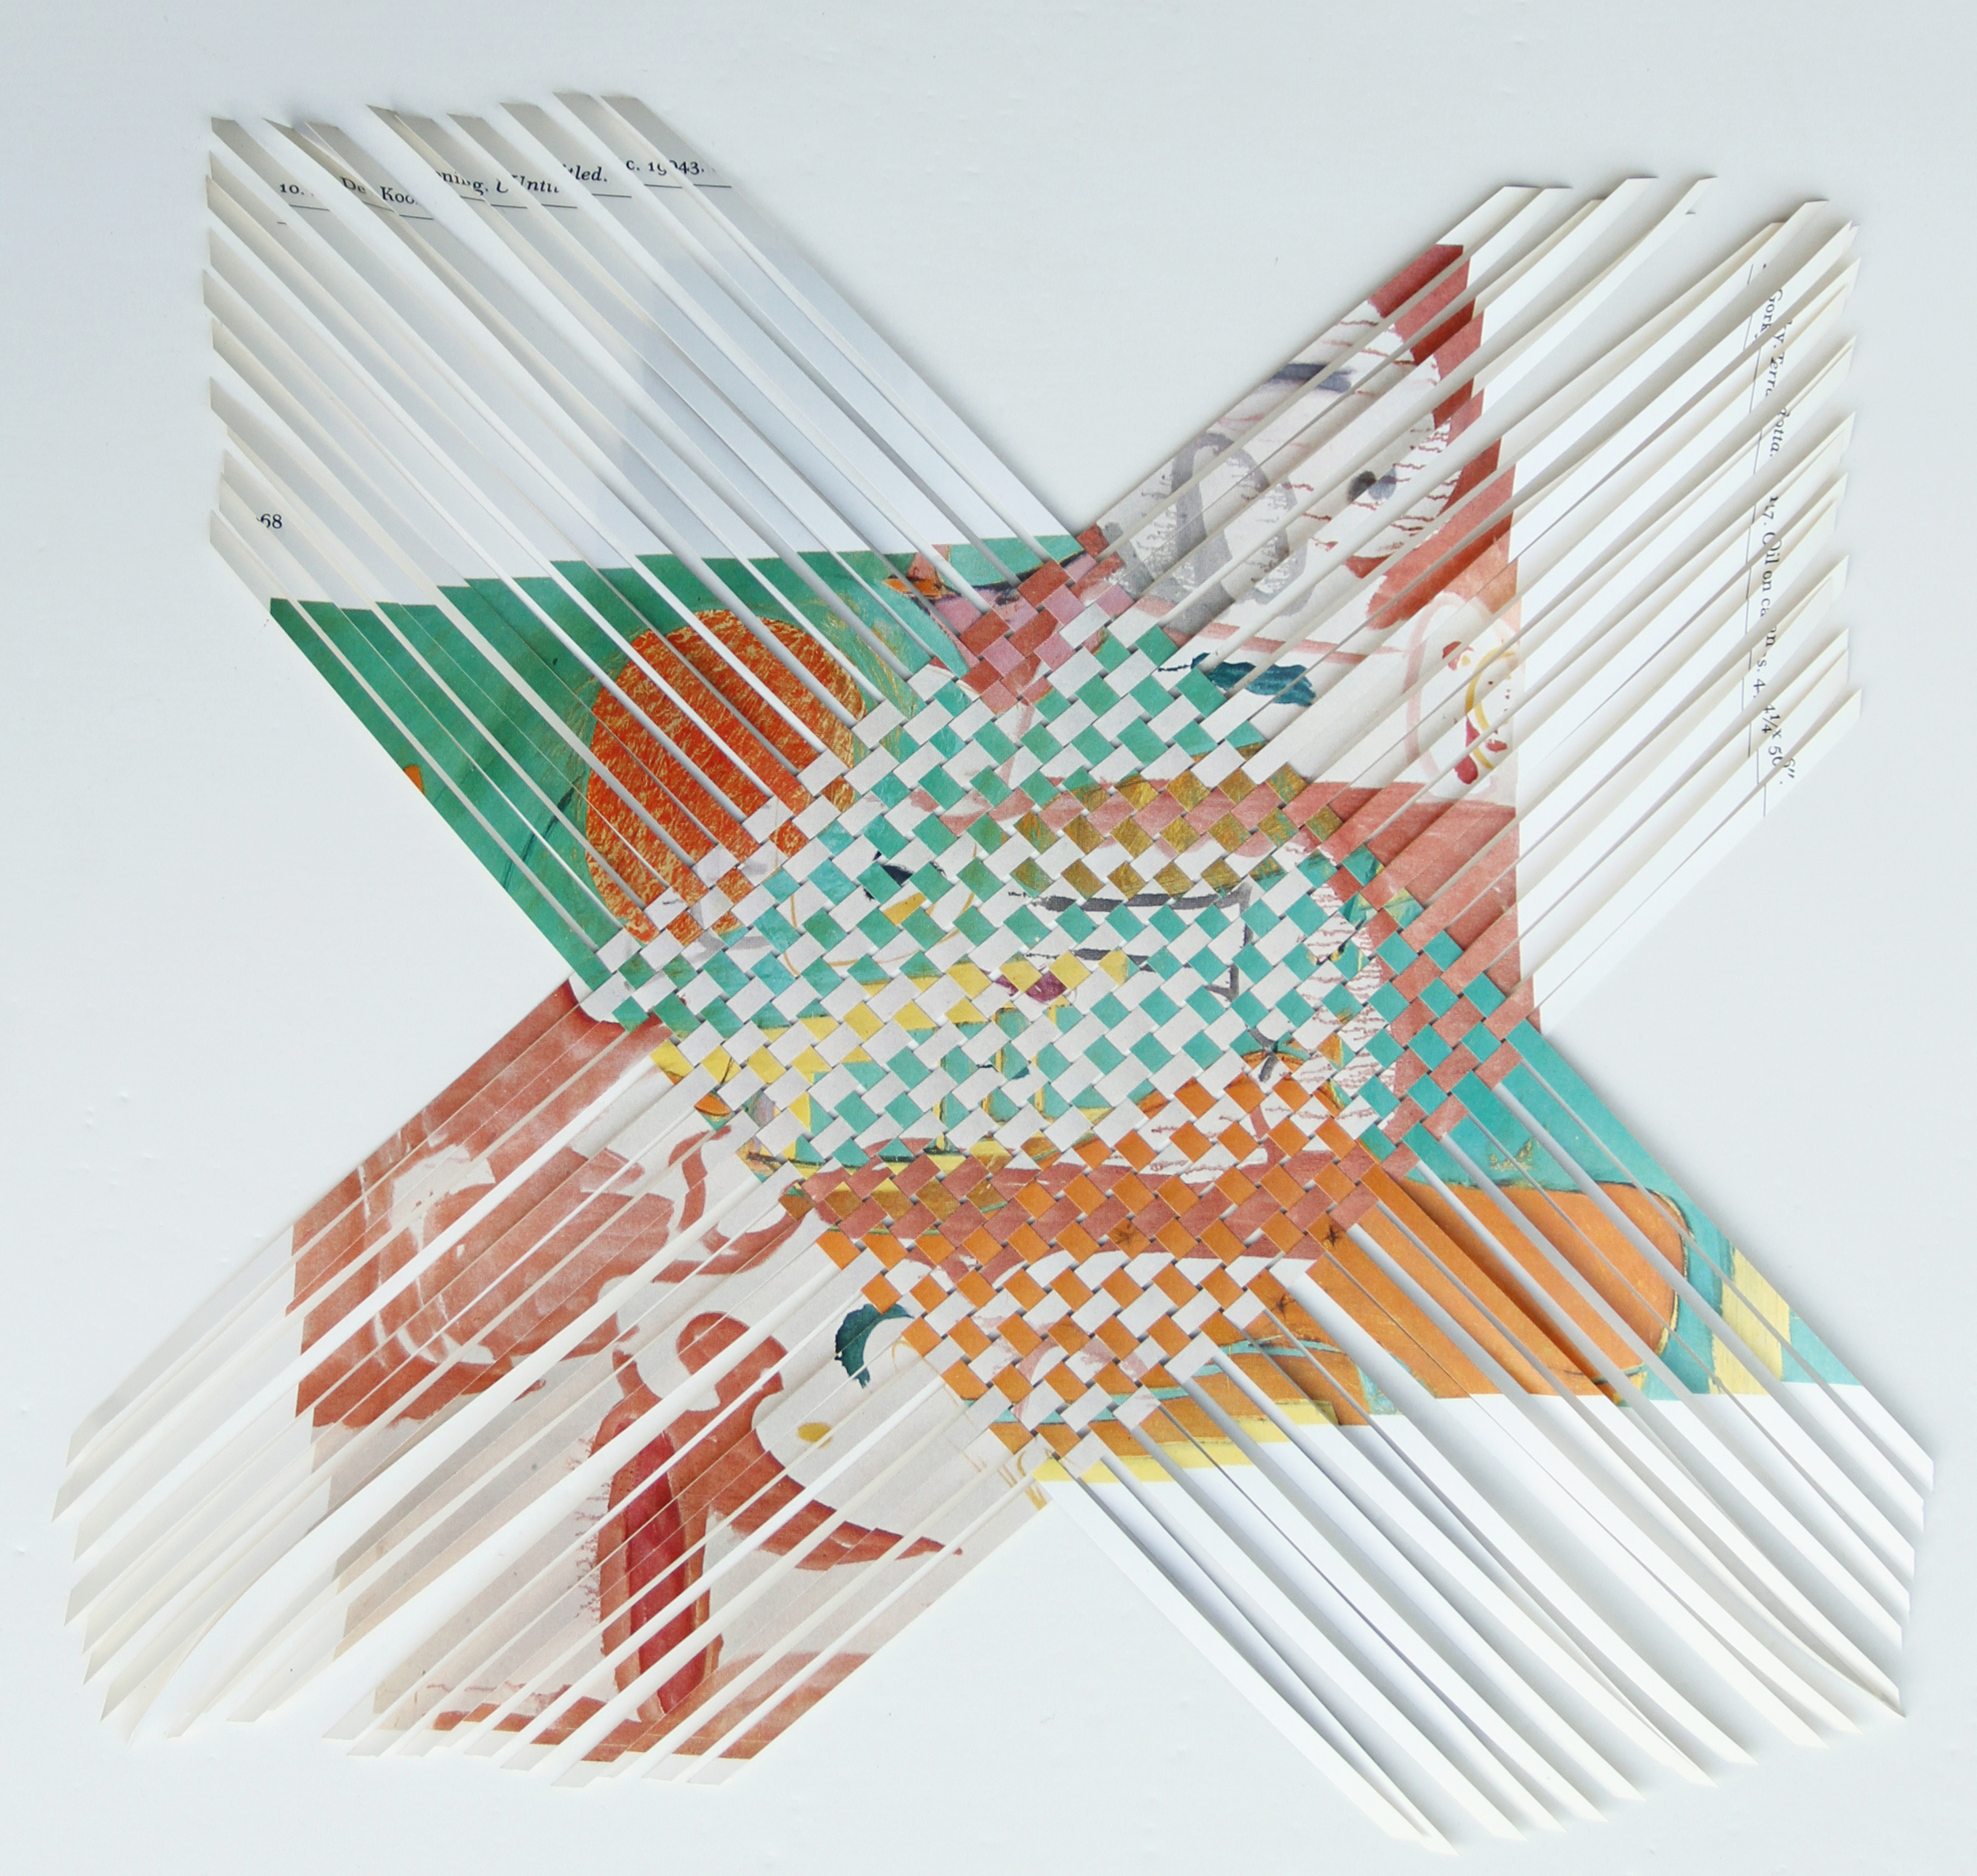 gorkydekooning, 2013, paper weaving, 10 x 10